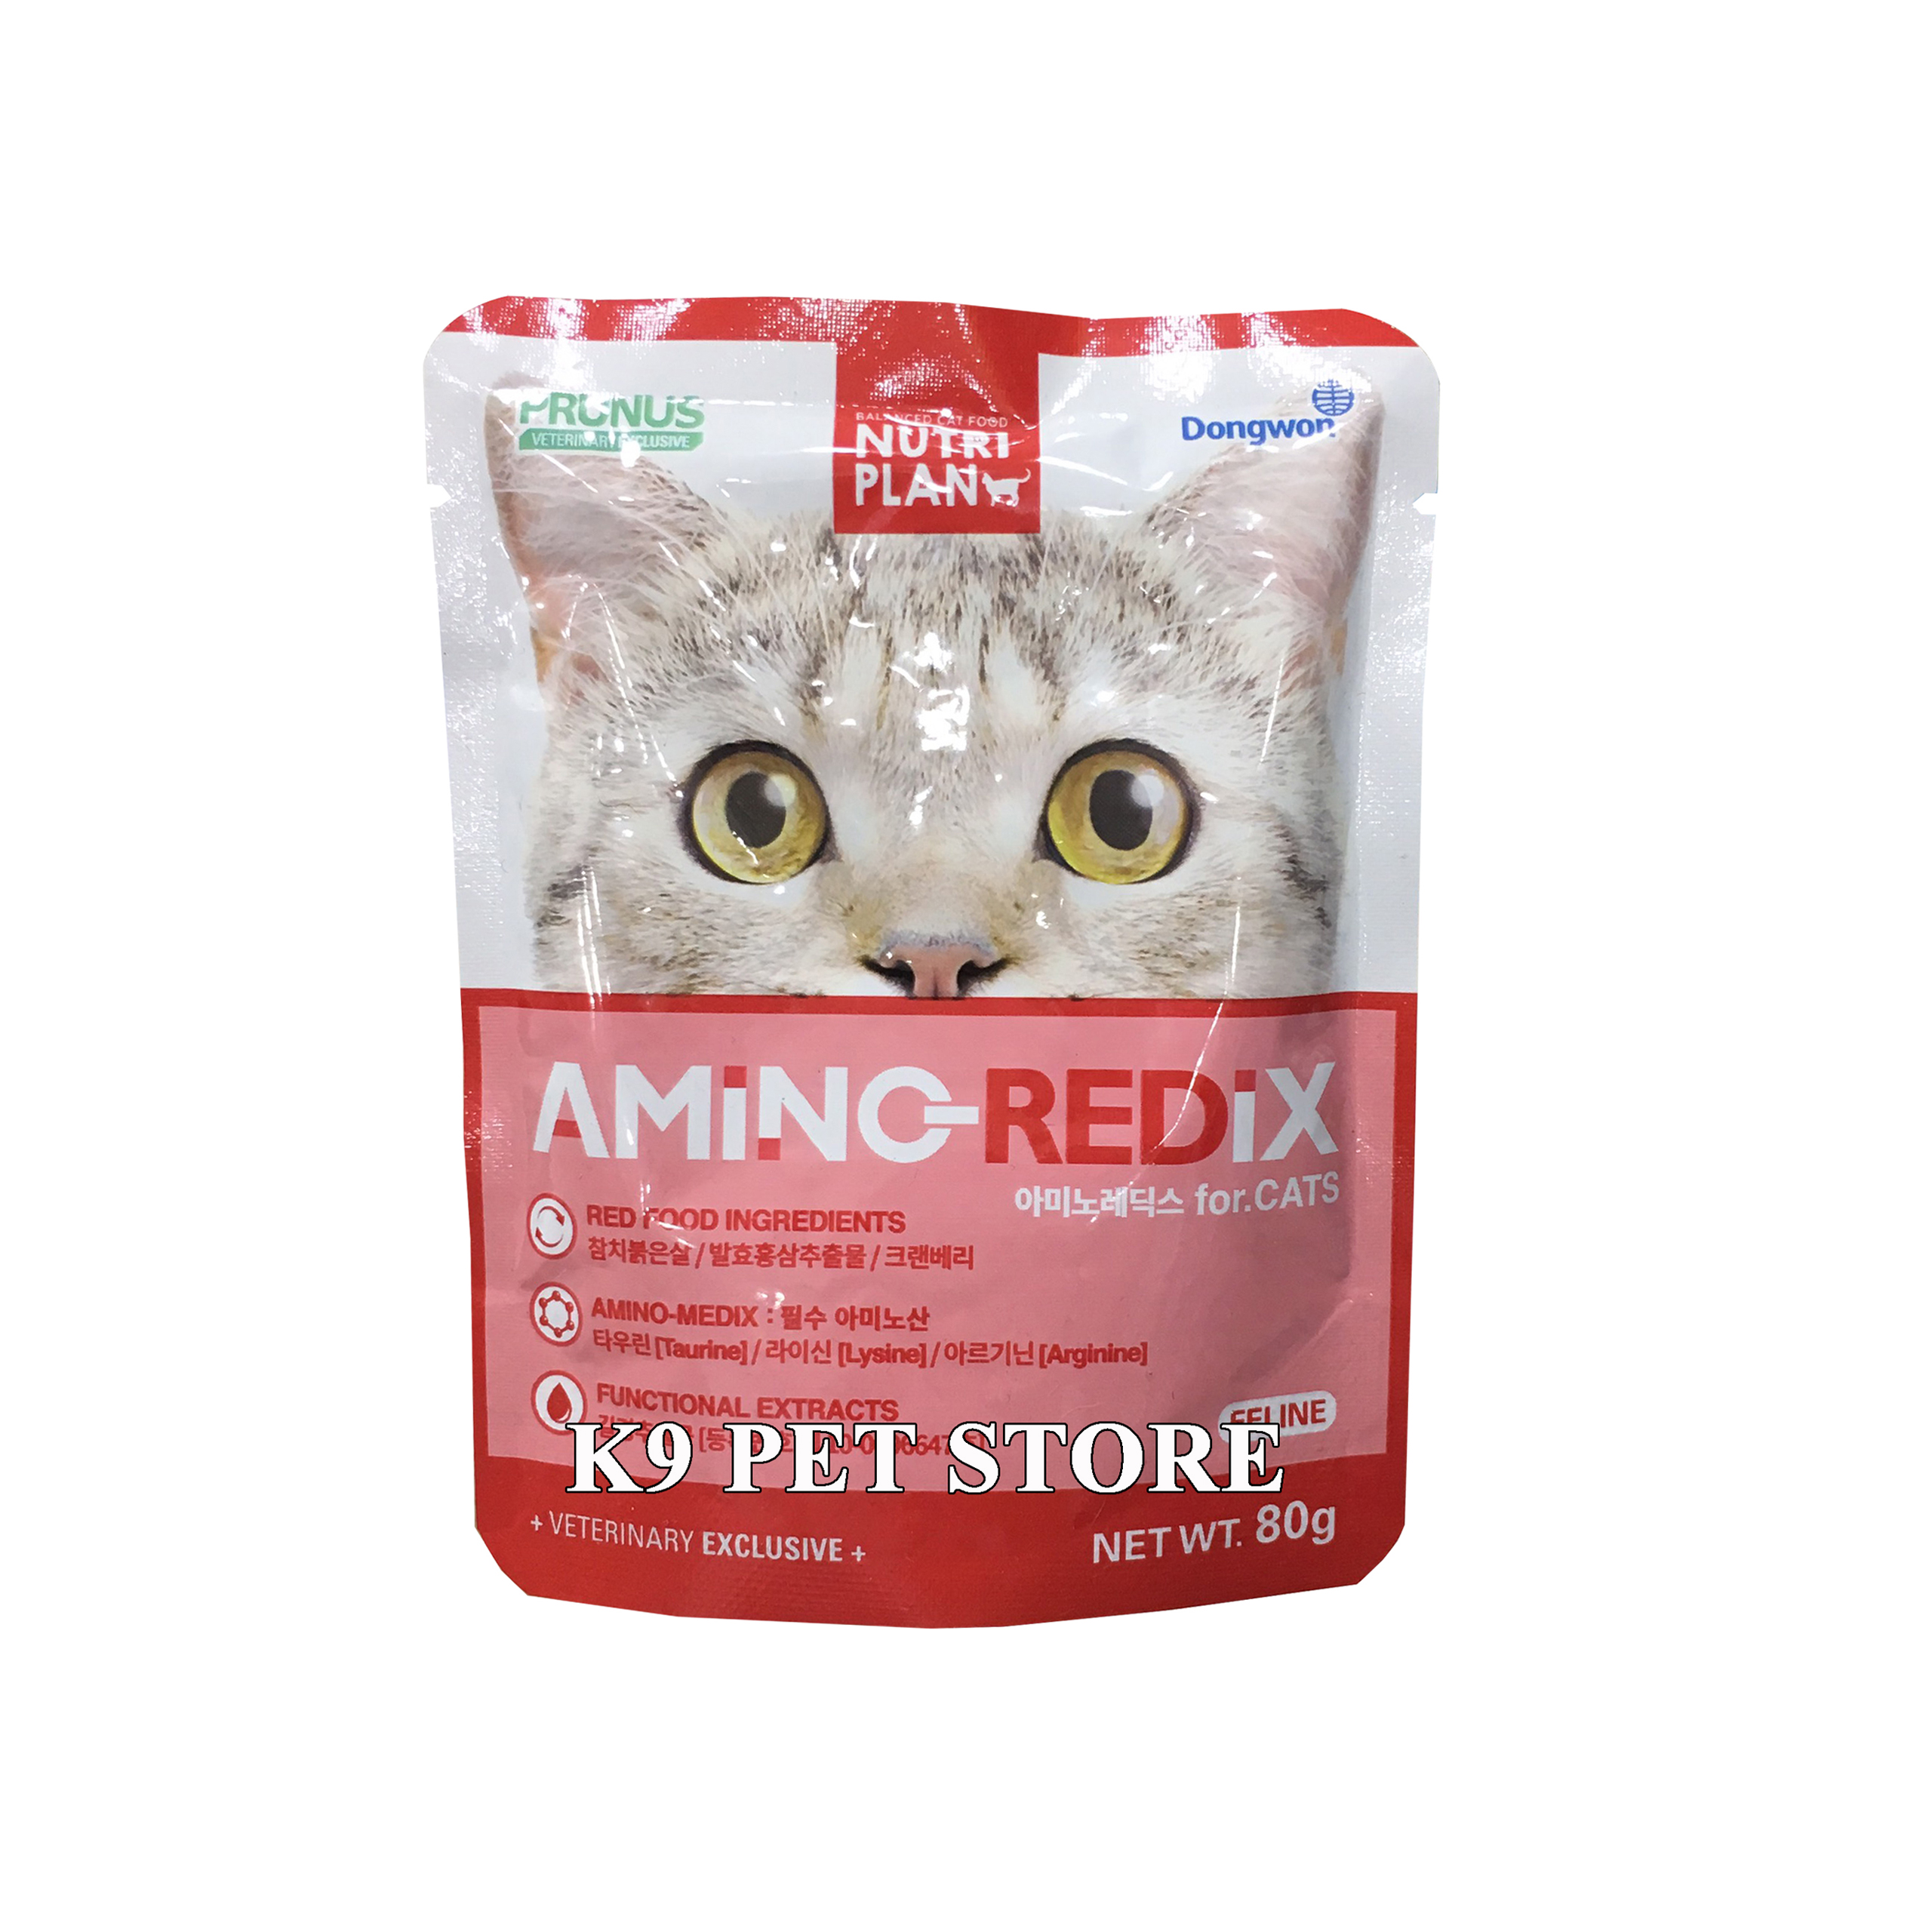 Pate mèo Amino-Redix Nutri Plan gói 80g